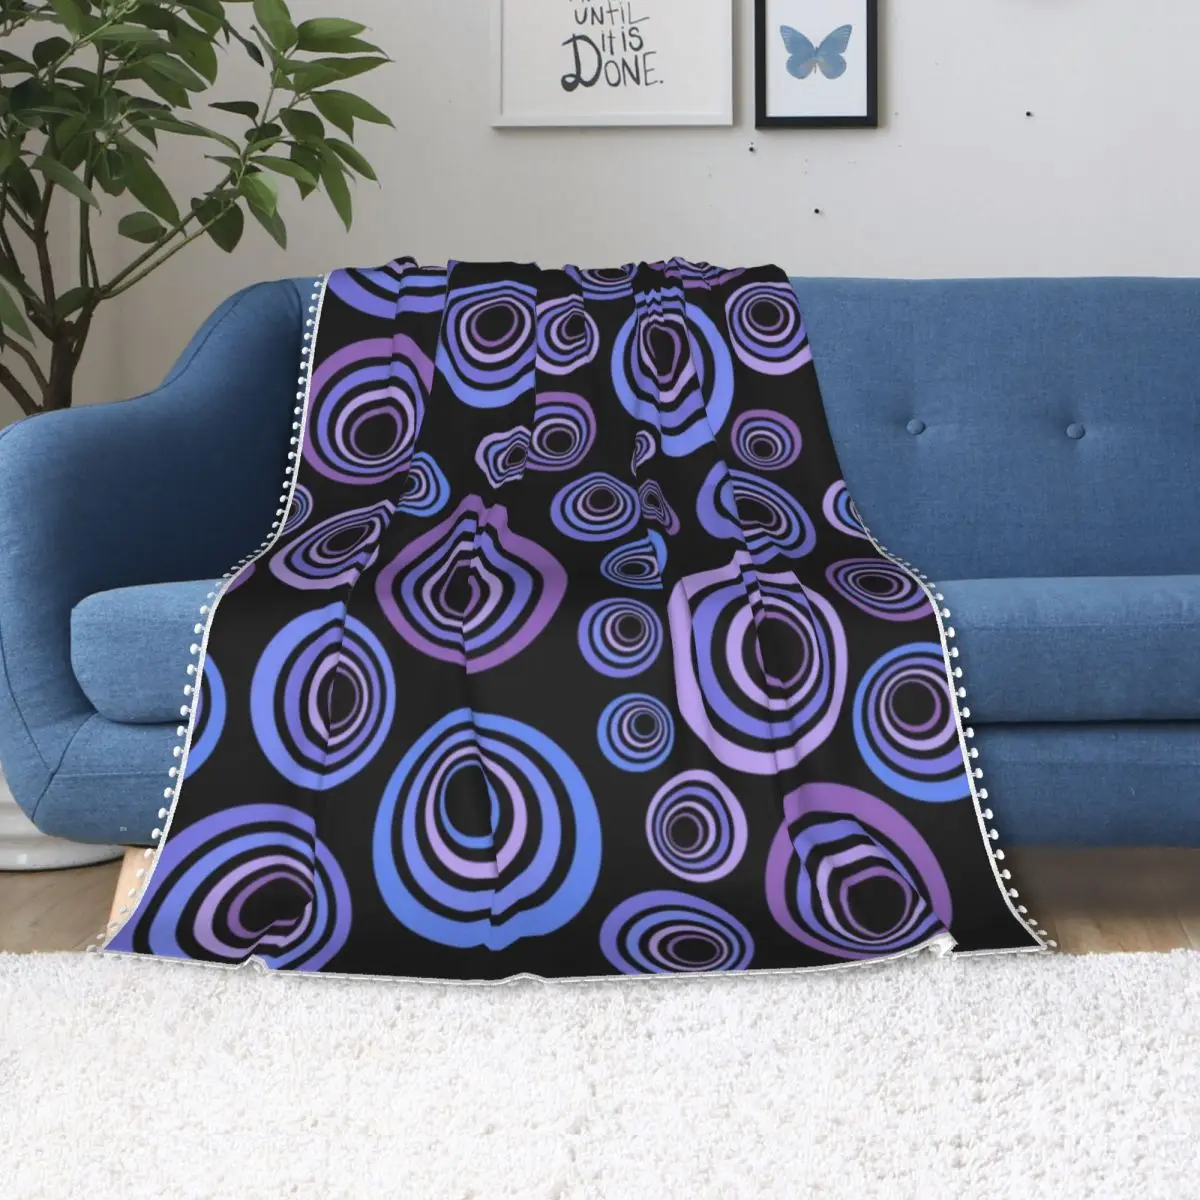 Retro Circles Print Blanket Ultraviolet Pattern Soft Cheap Bedspread Fuzzy Fleece For Photo Shoot Blanket